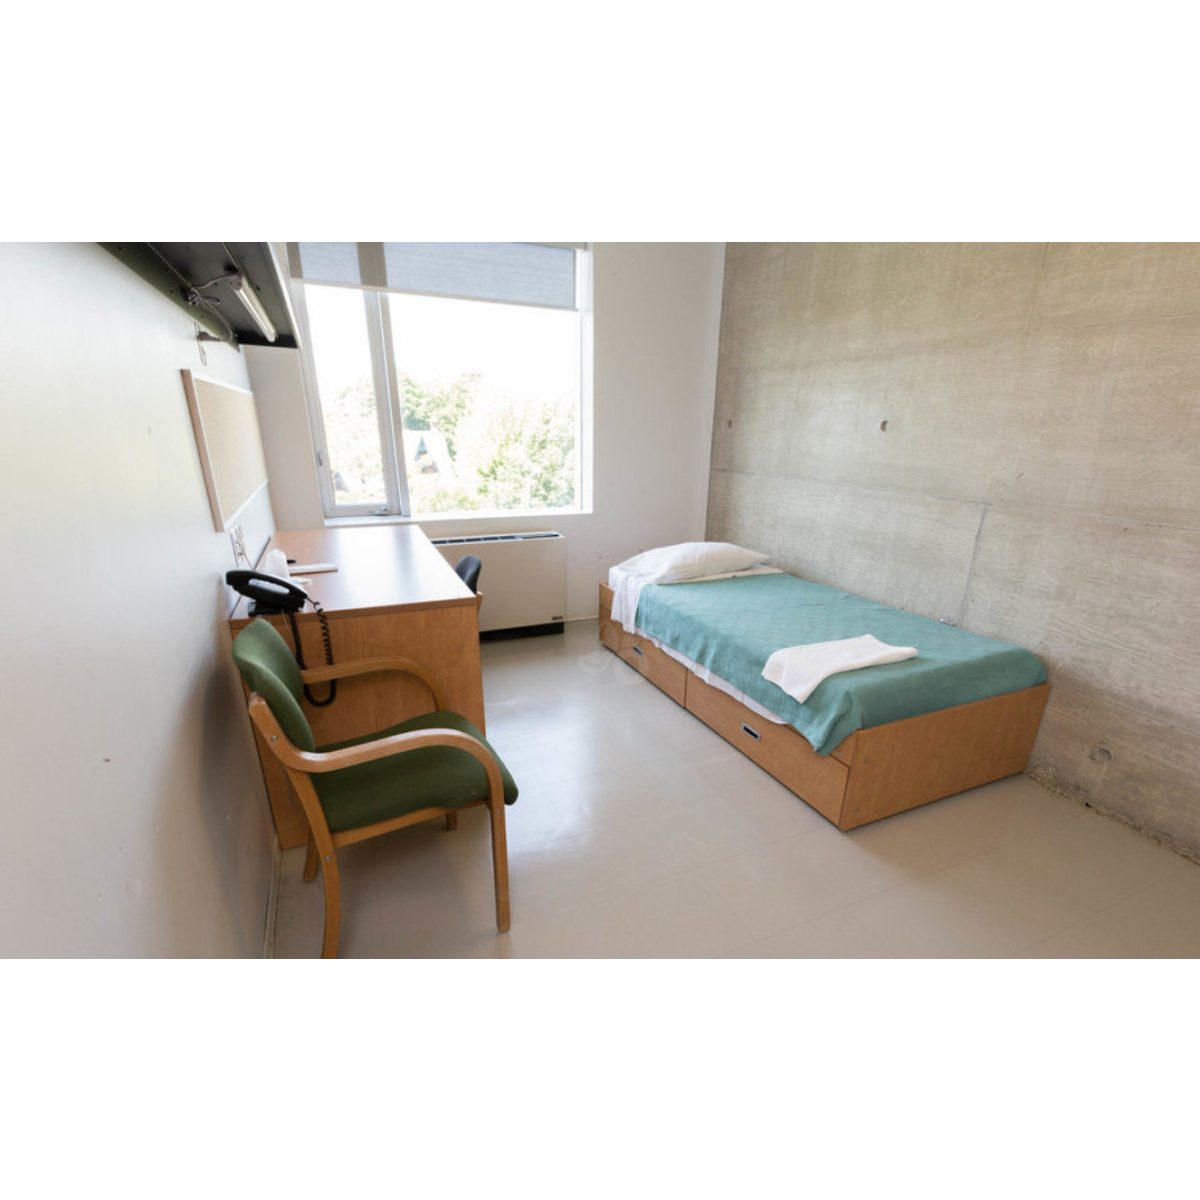 Single room in Innsbruck student housing; suitable for Erasmus students 3